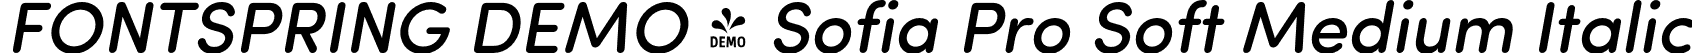 FONTSPRING DEMO - Sofia Pro Soft Medium Italic font - Fontspring-DEMO-SofiaProSoftMedit.otf